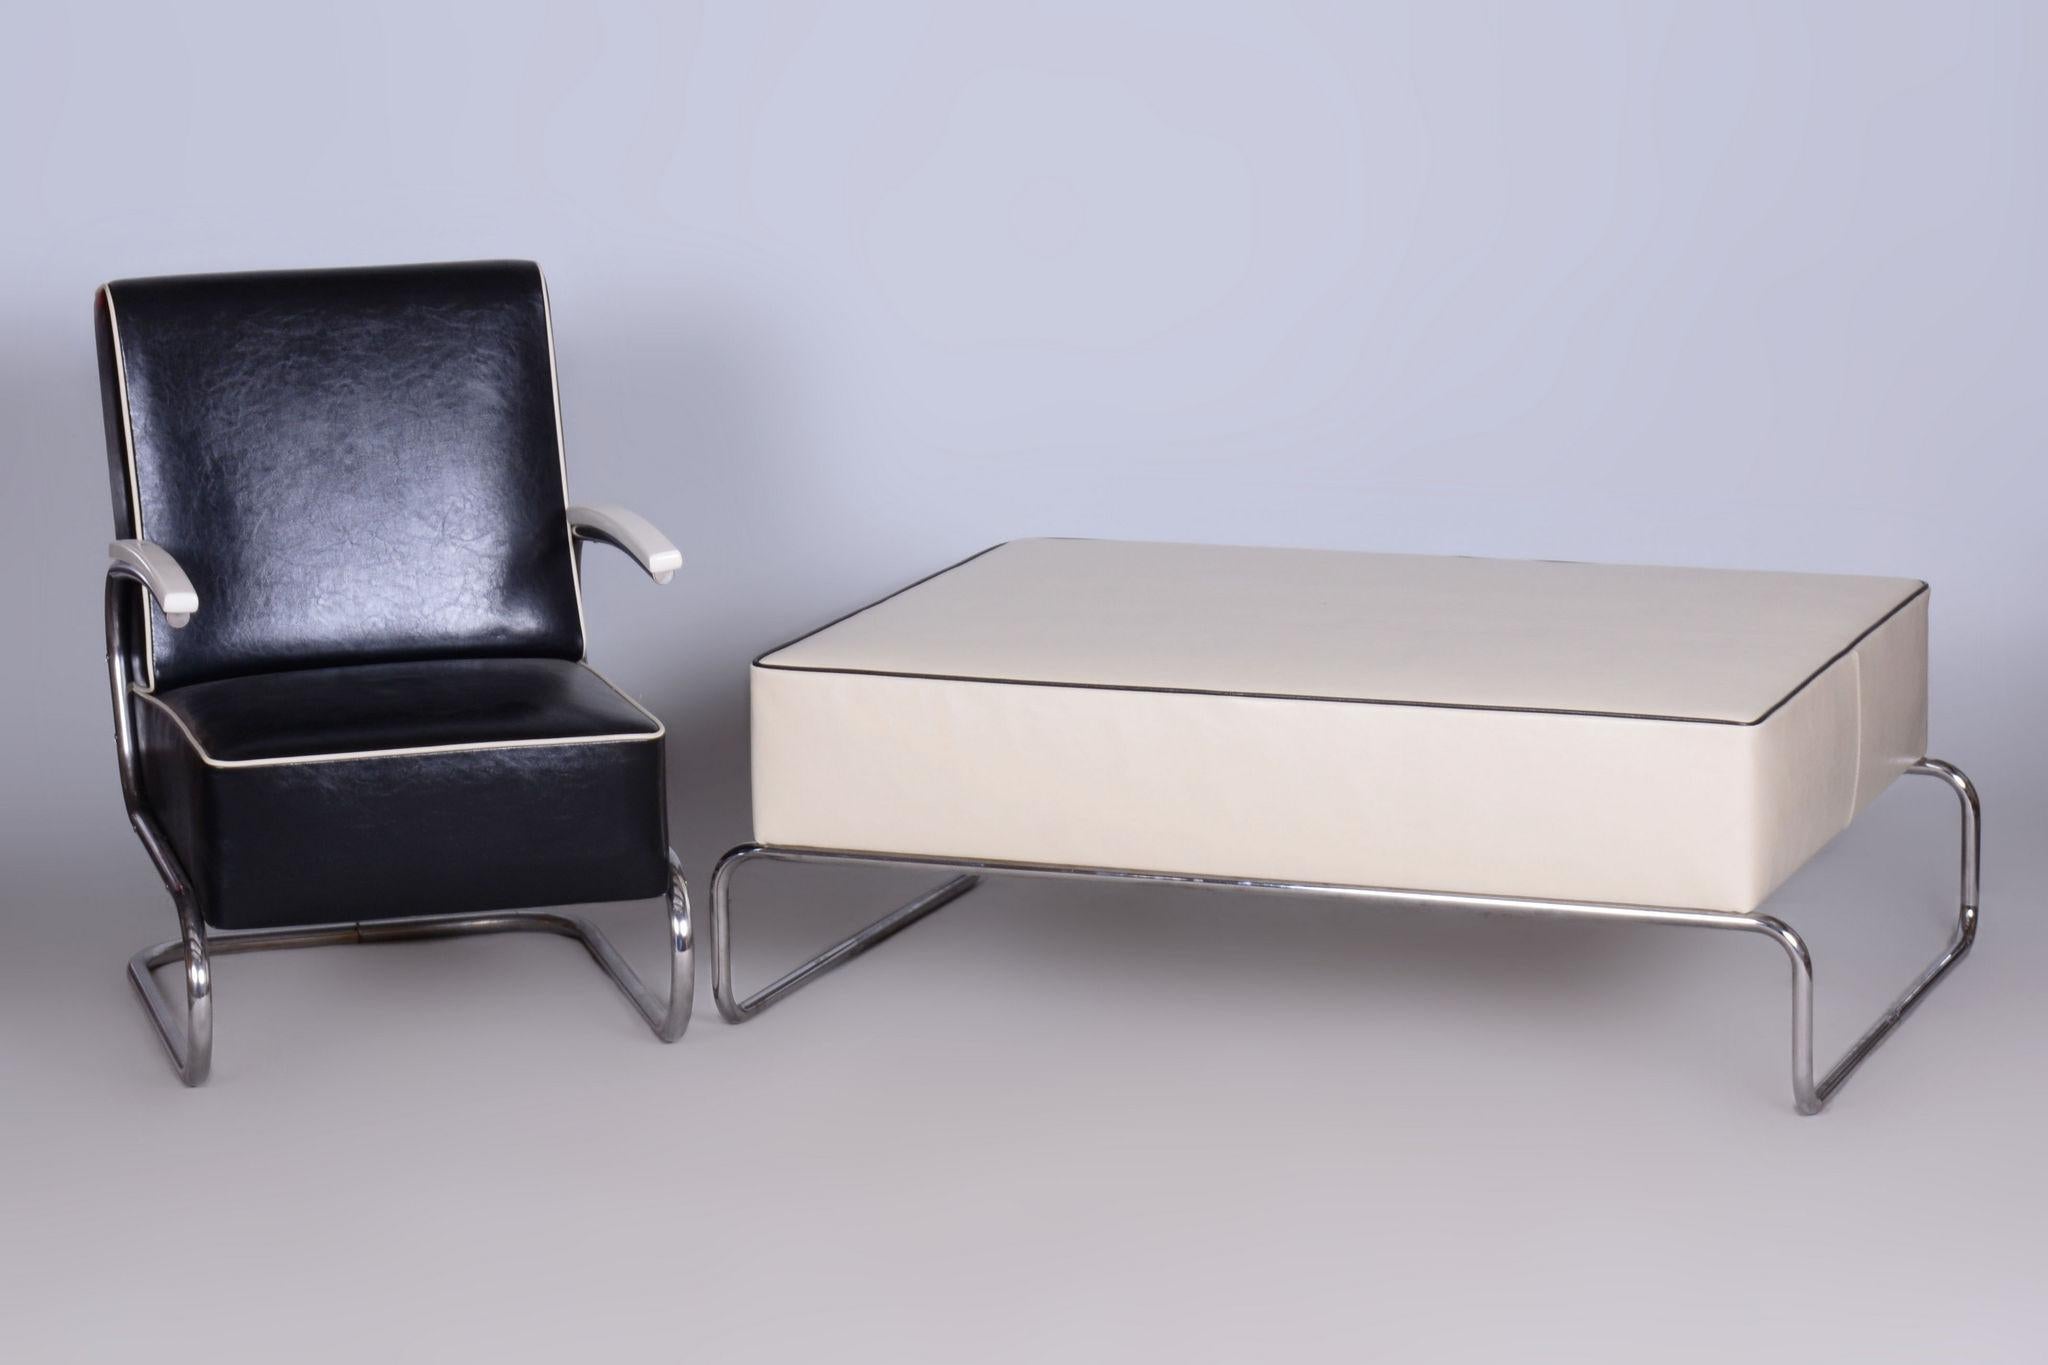 Restored Bauhaus Stool-Table, Chrome Steel, New Upholstery, Czechia, 1930s For Sale 3